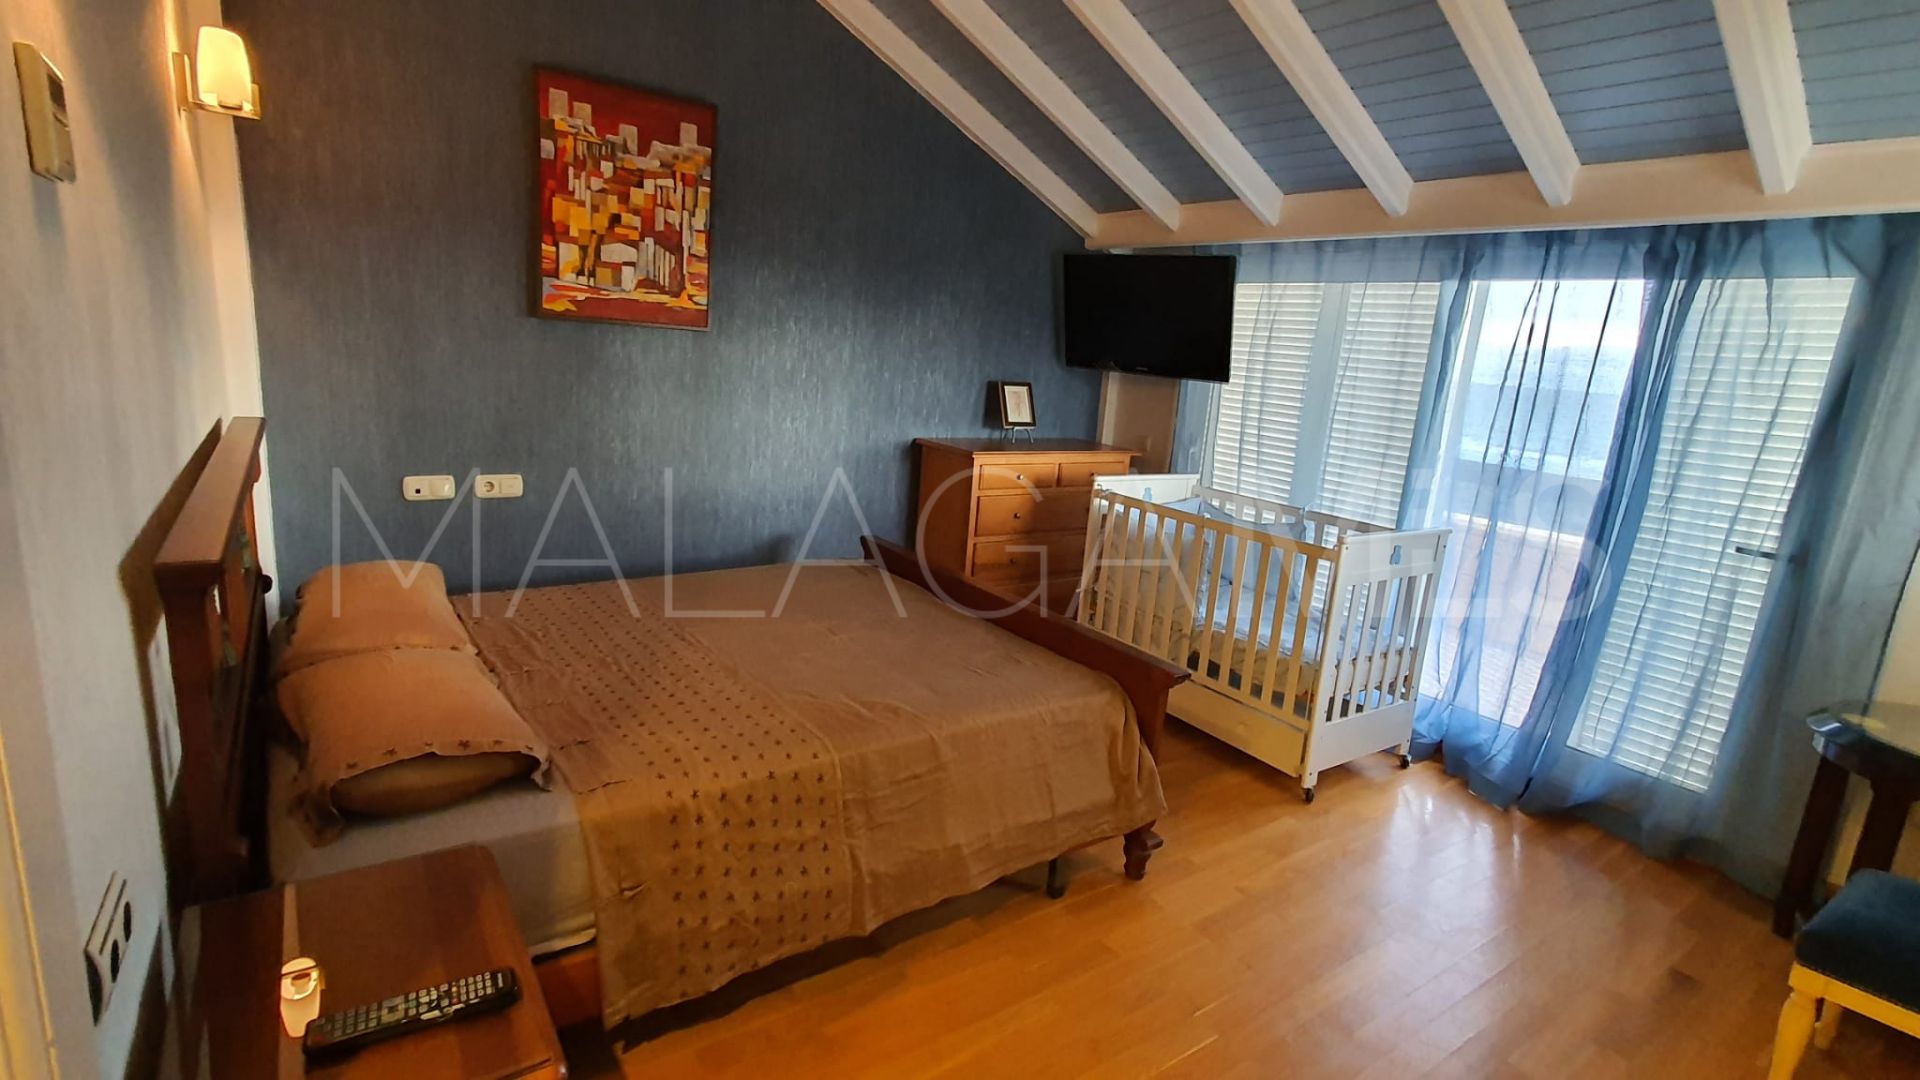 Buy house in Bahia de Marbella with 5 bedrooms